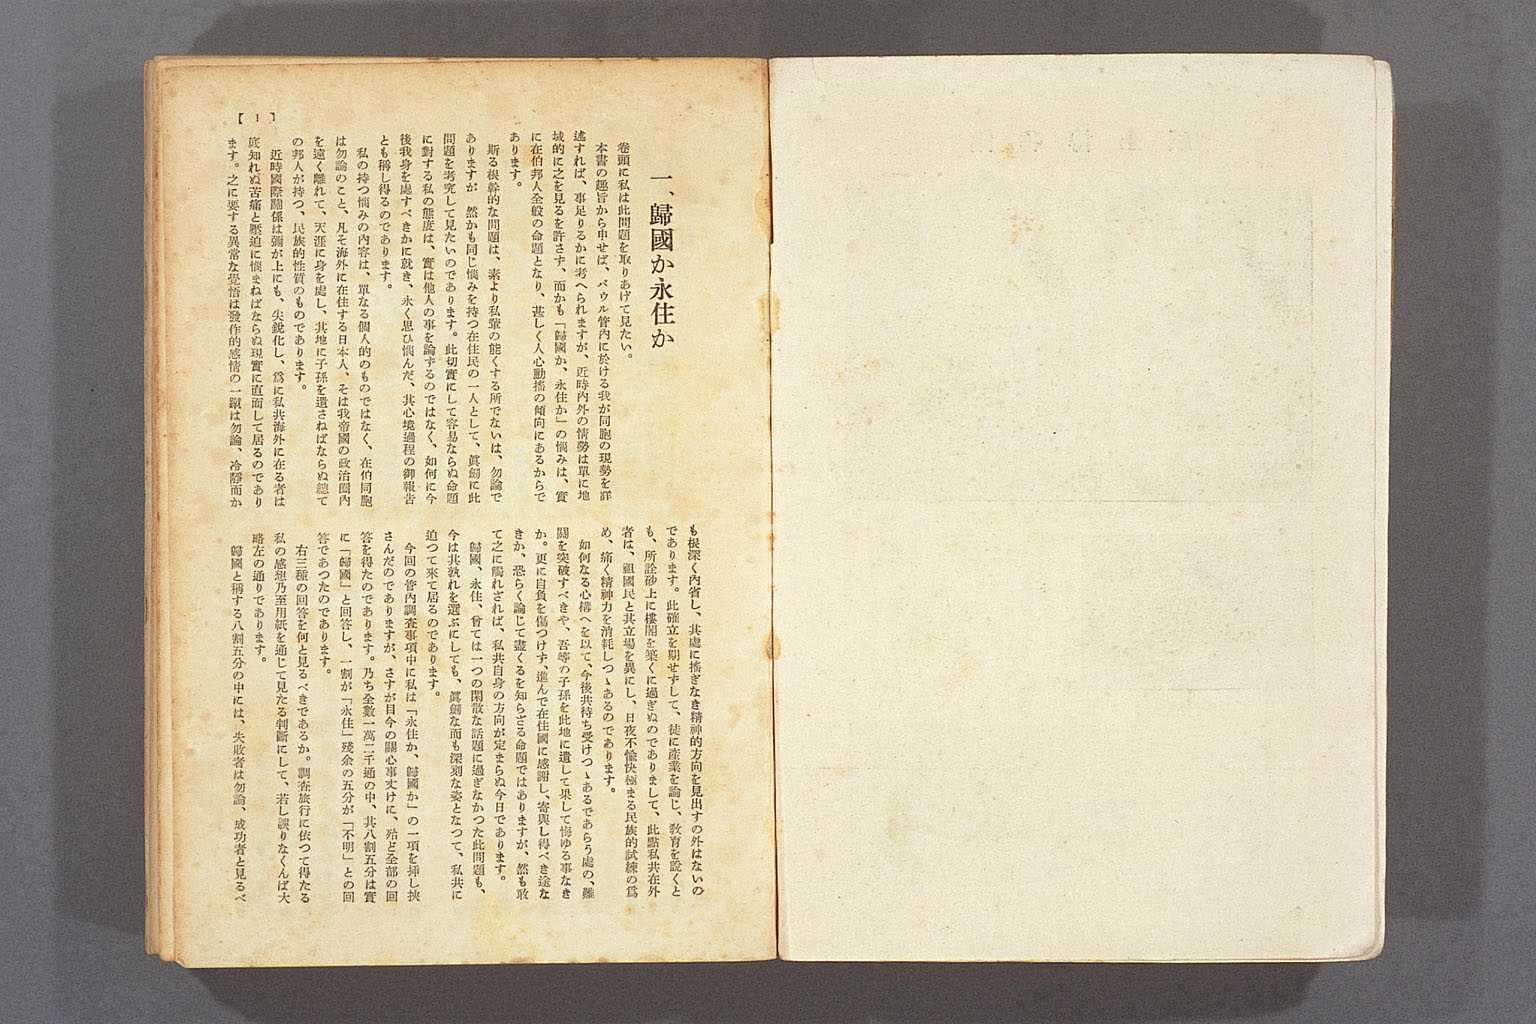 Image “Shungoro Wako's "Return to Japan or permanently settle"”